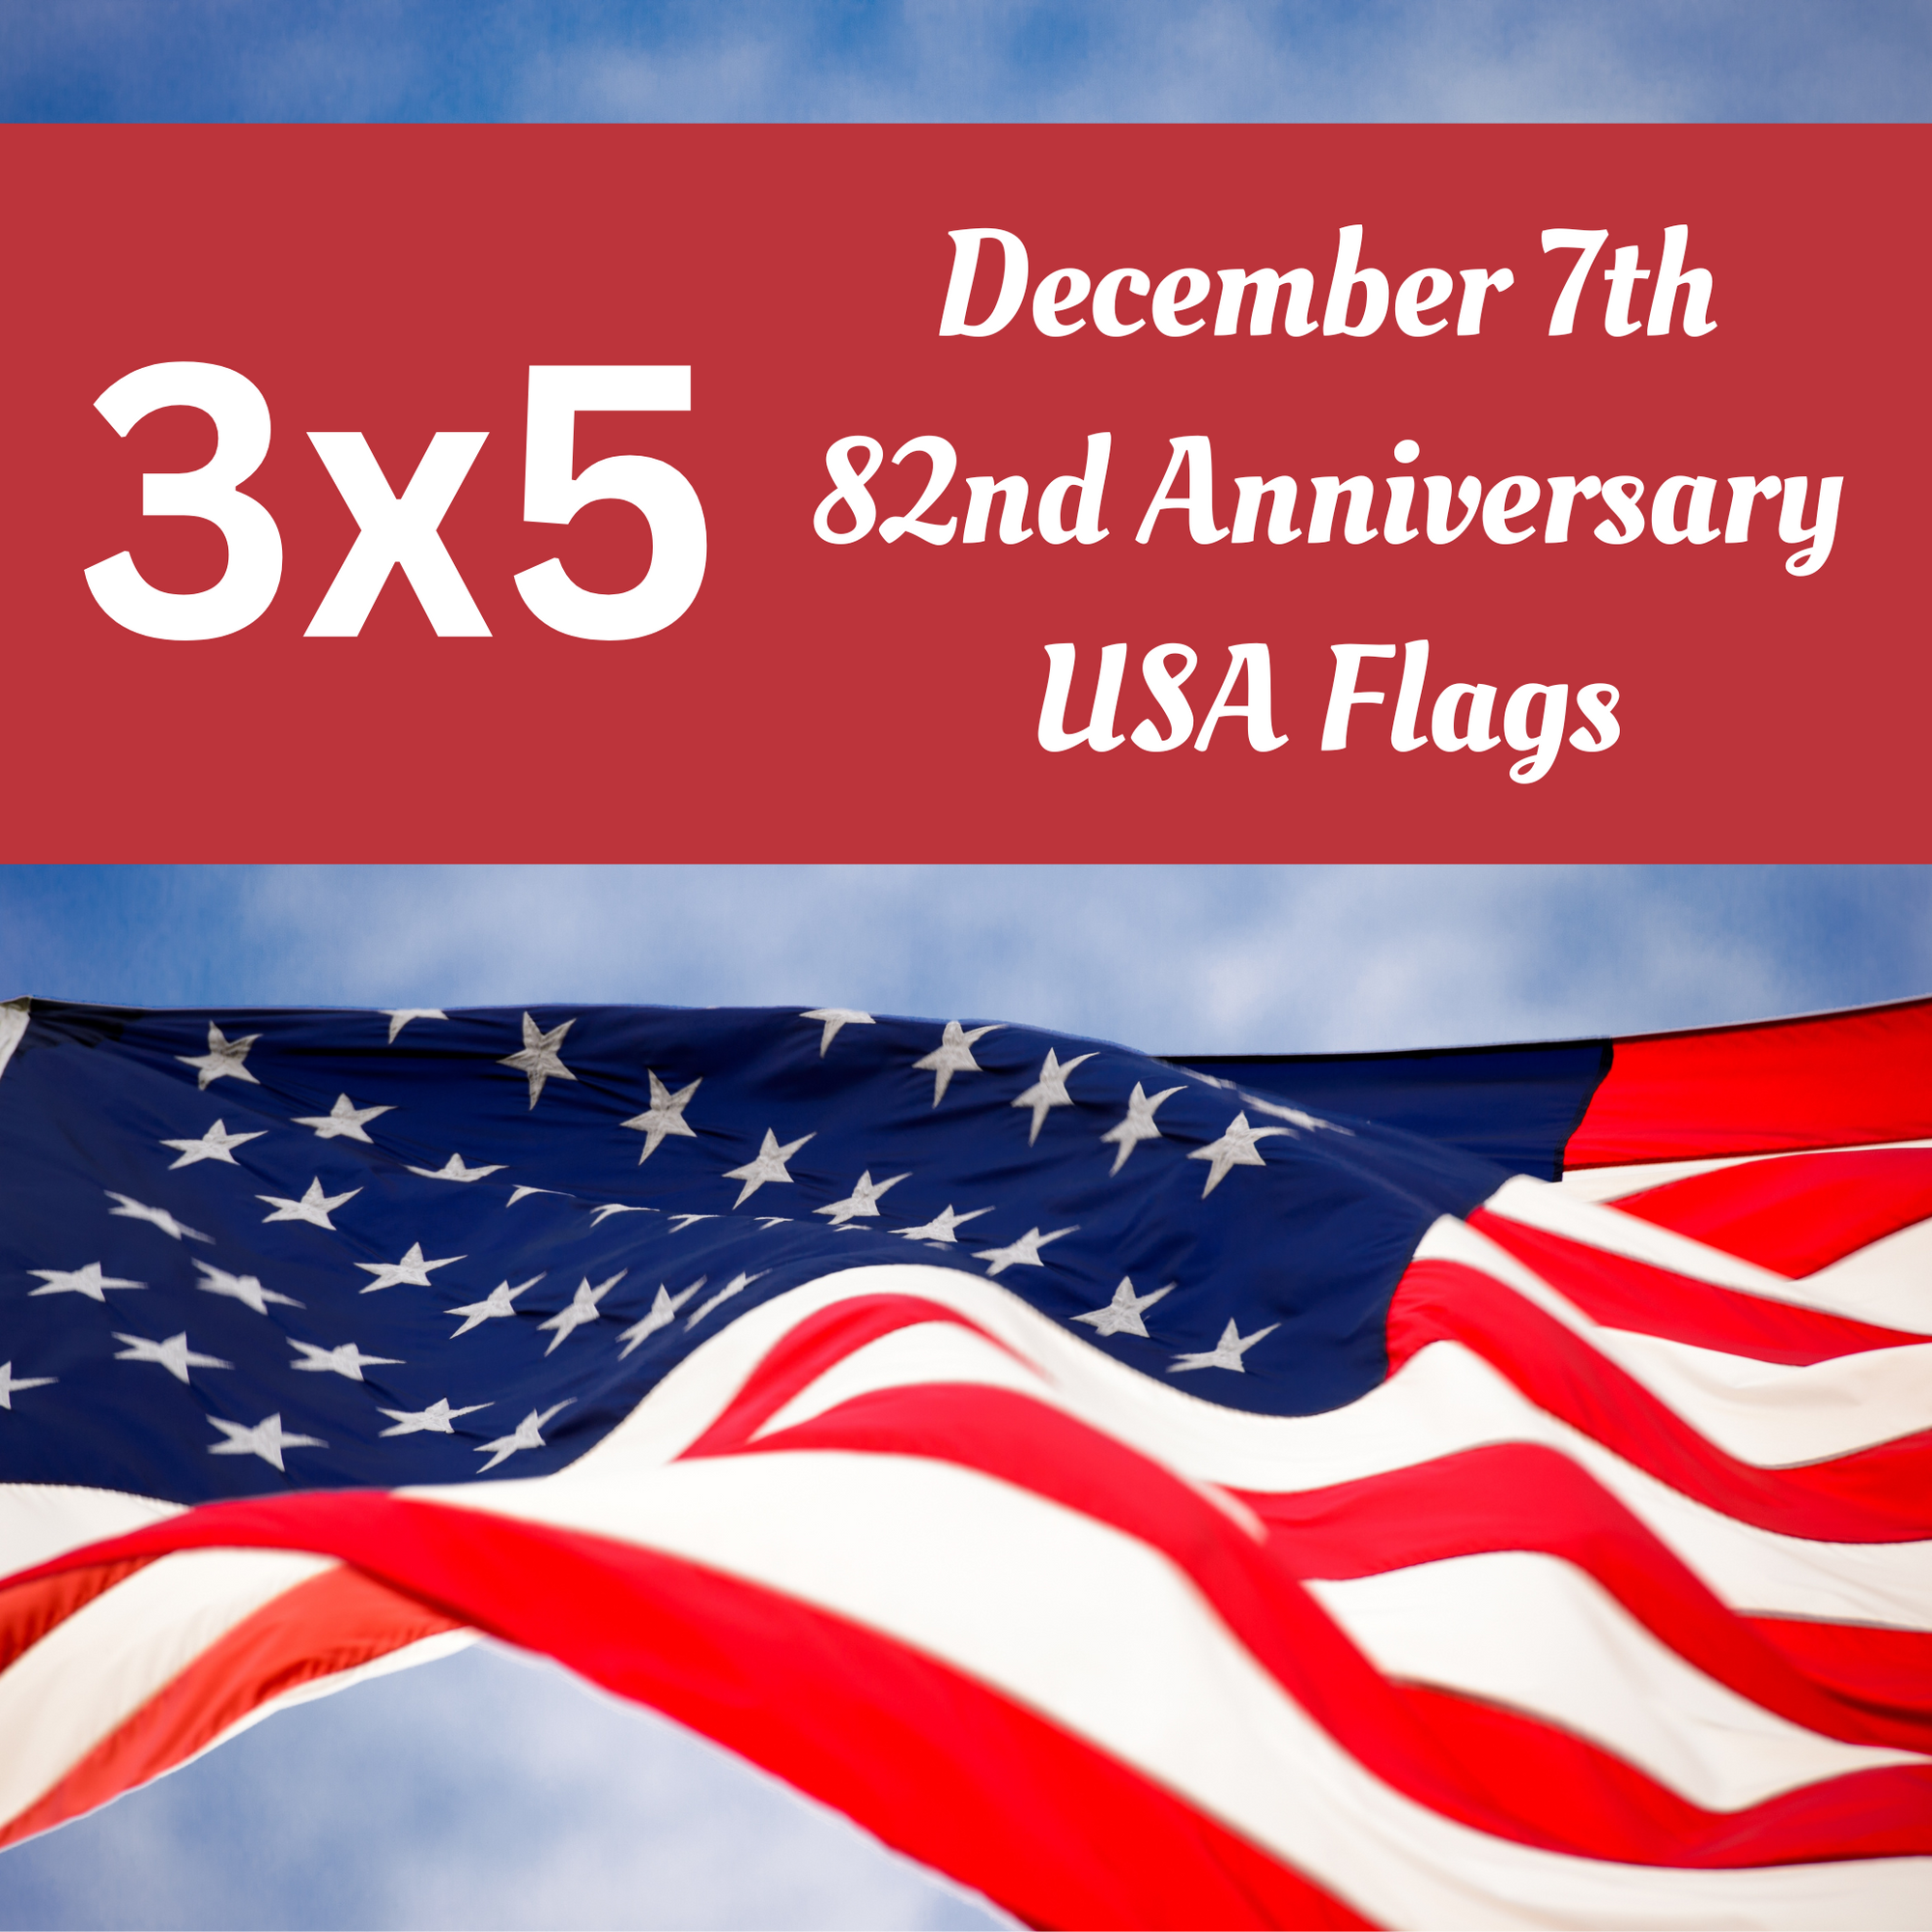 3x5 December 7th USA Flag Flown On USS Arizona Memorial At Pearl Harbor